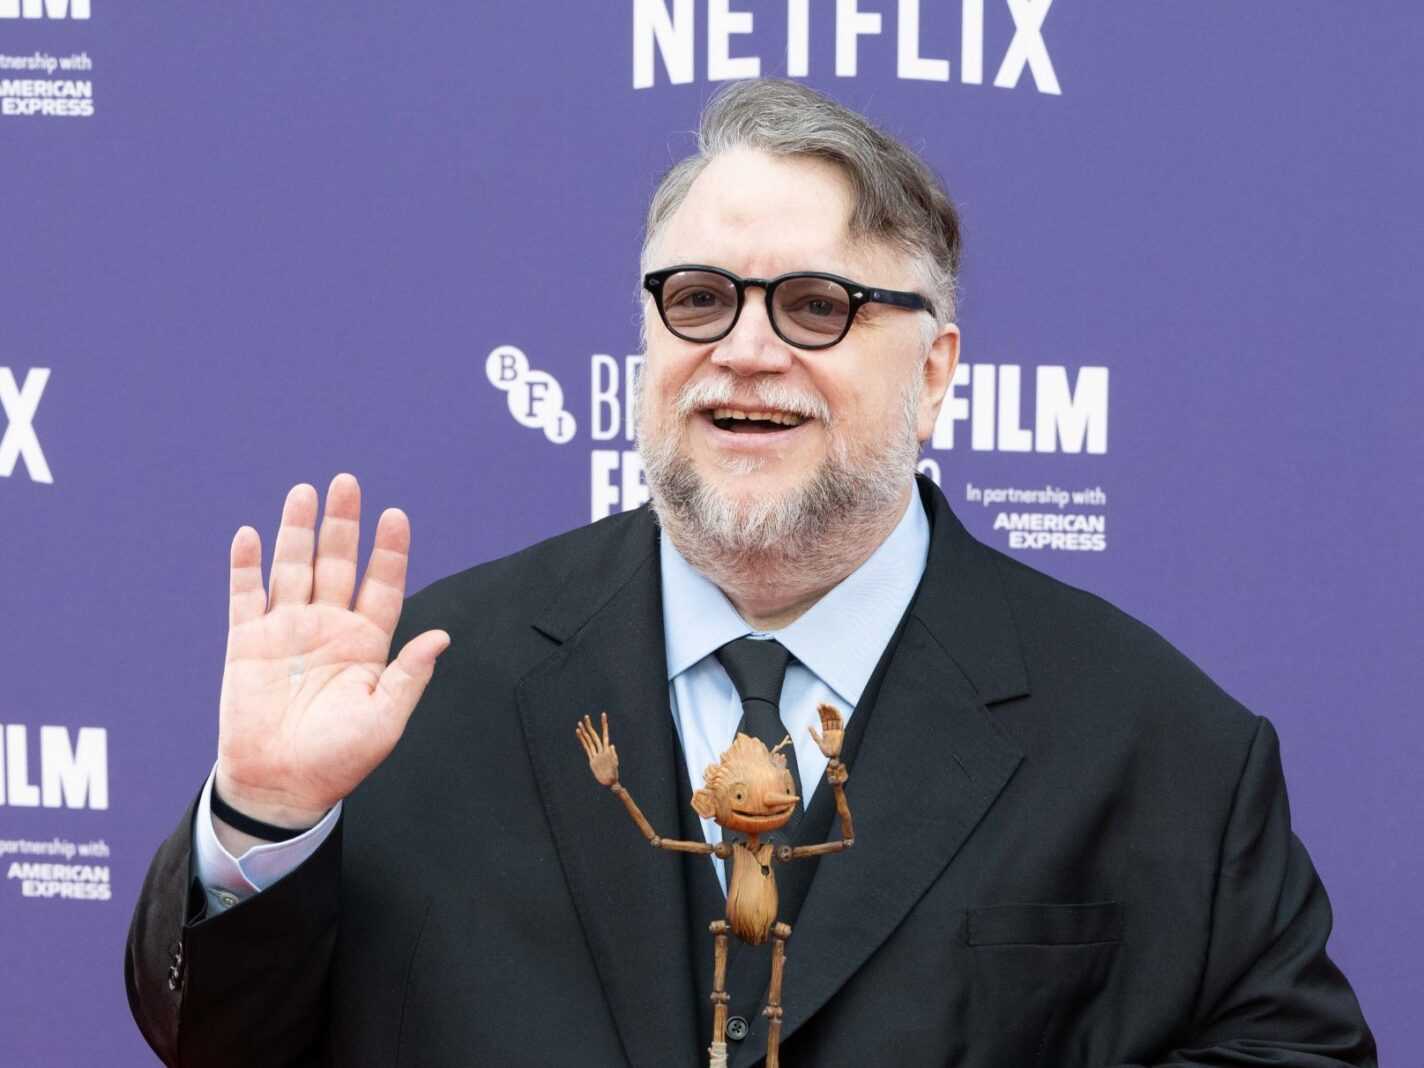 Guillermo del Toro (Source: Netflix)